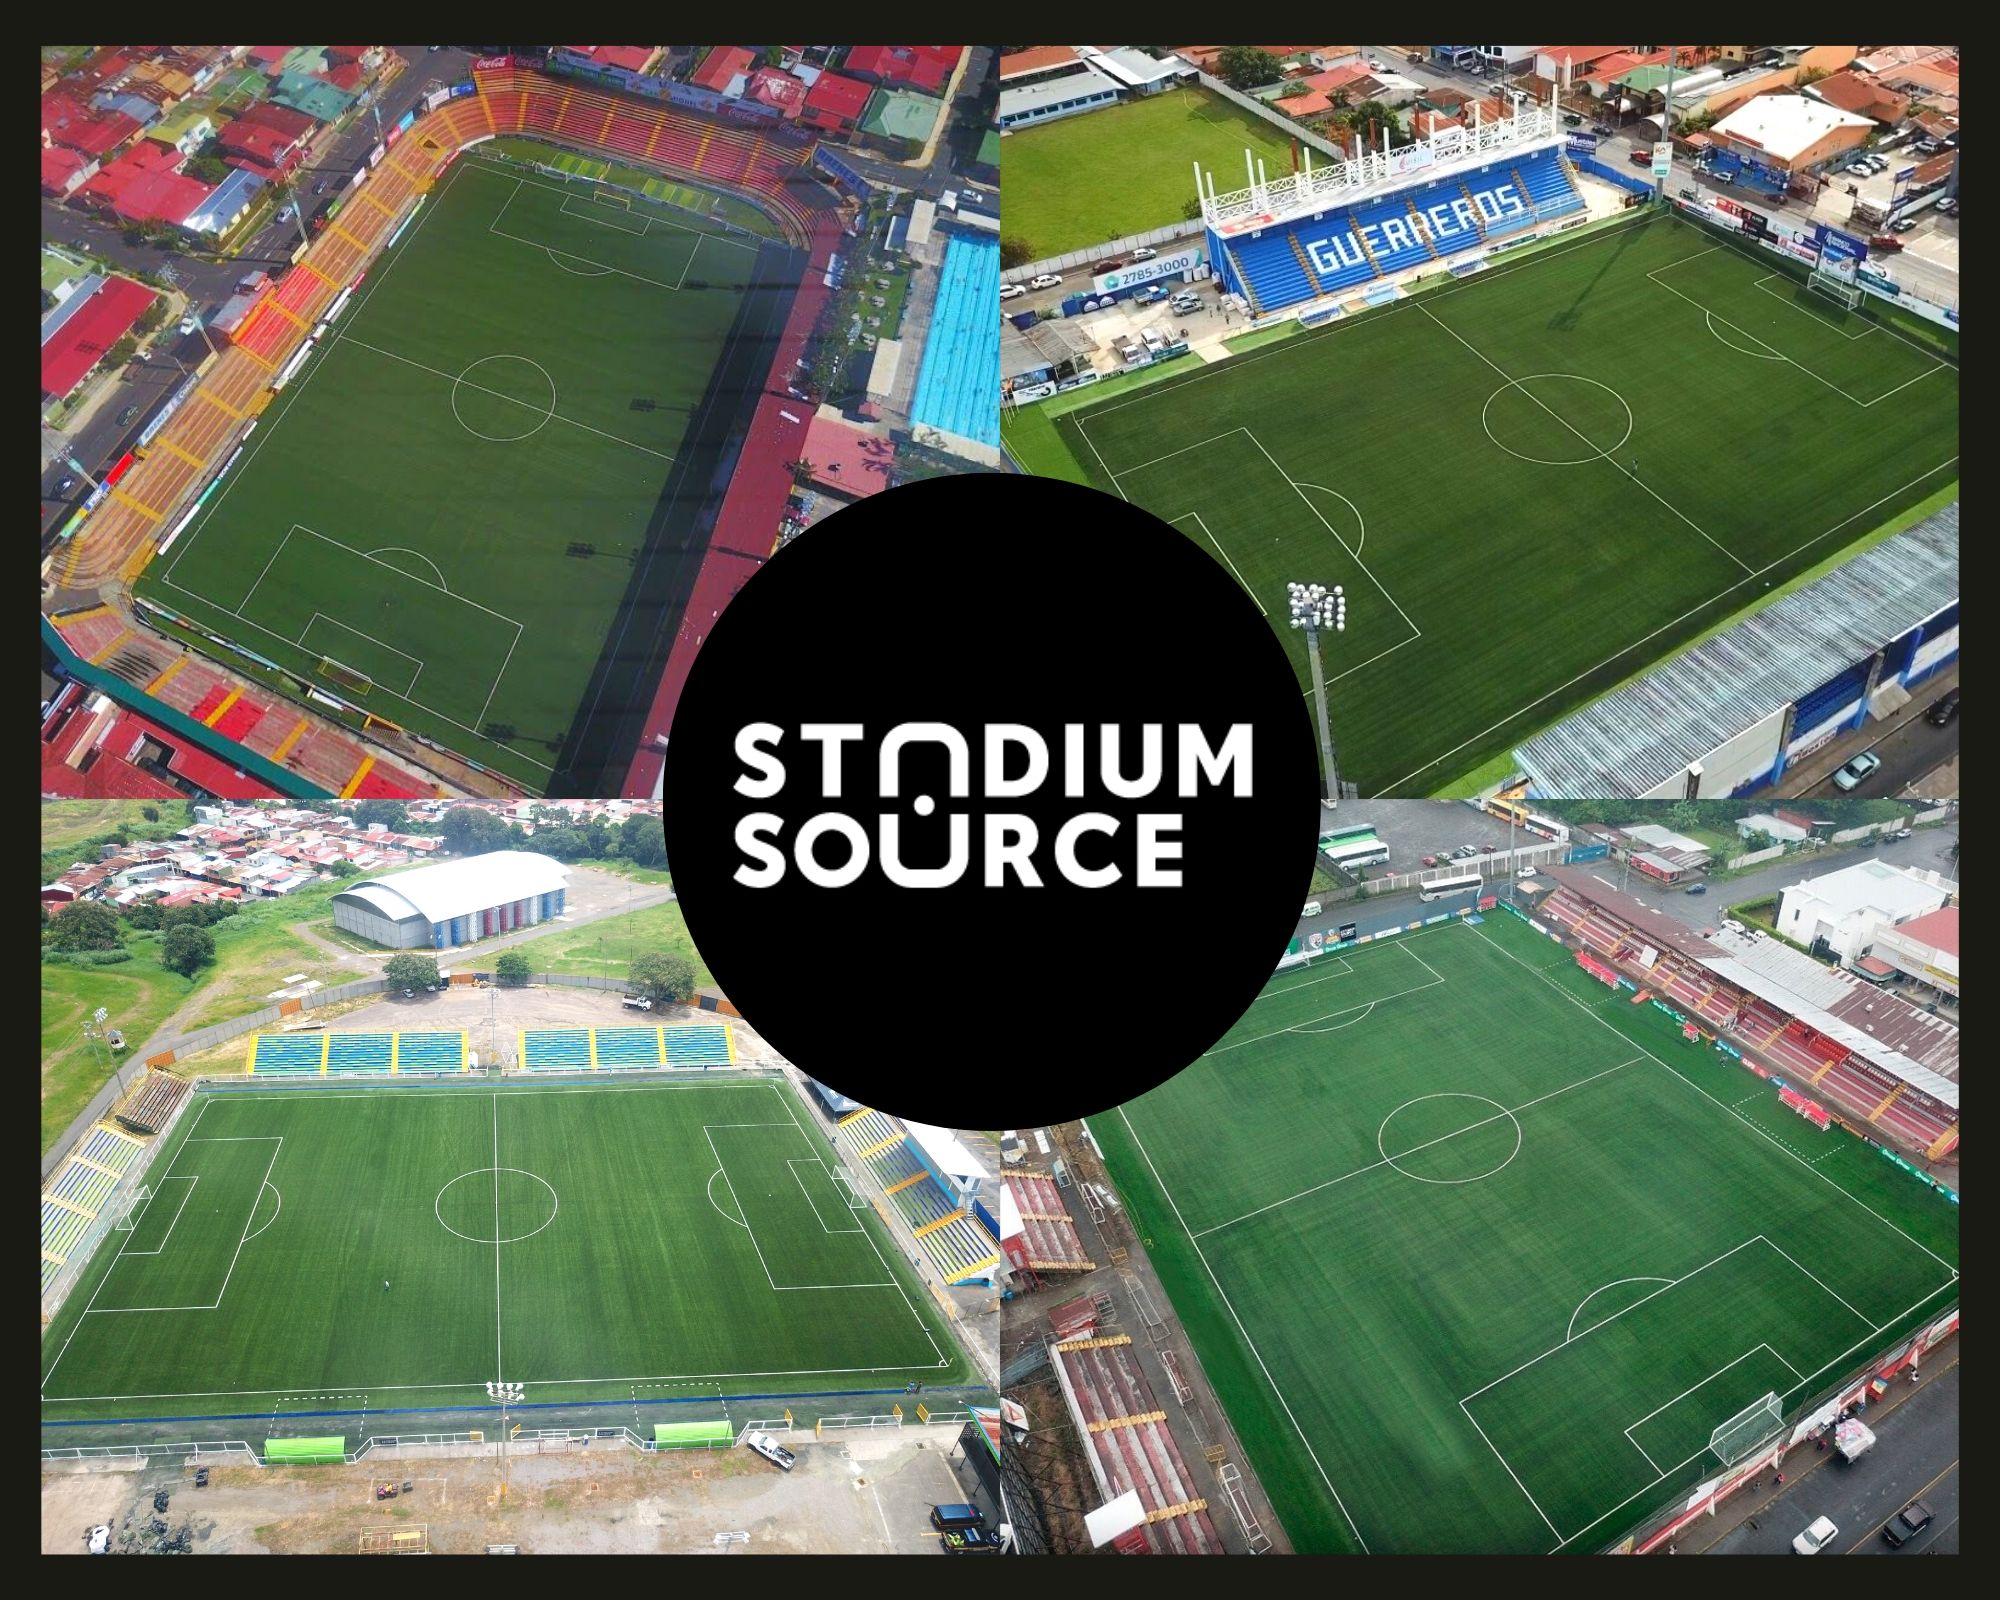 cesped-sintetico-deportivo-estadios-cesped-artificial-futbol-costa-rica-stadium-source